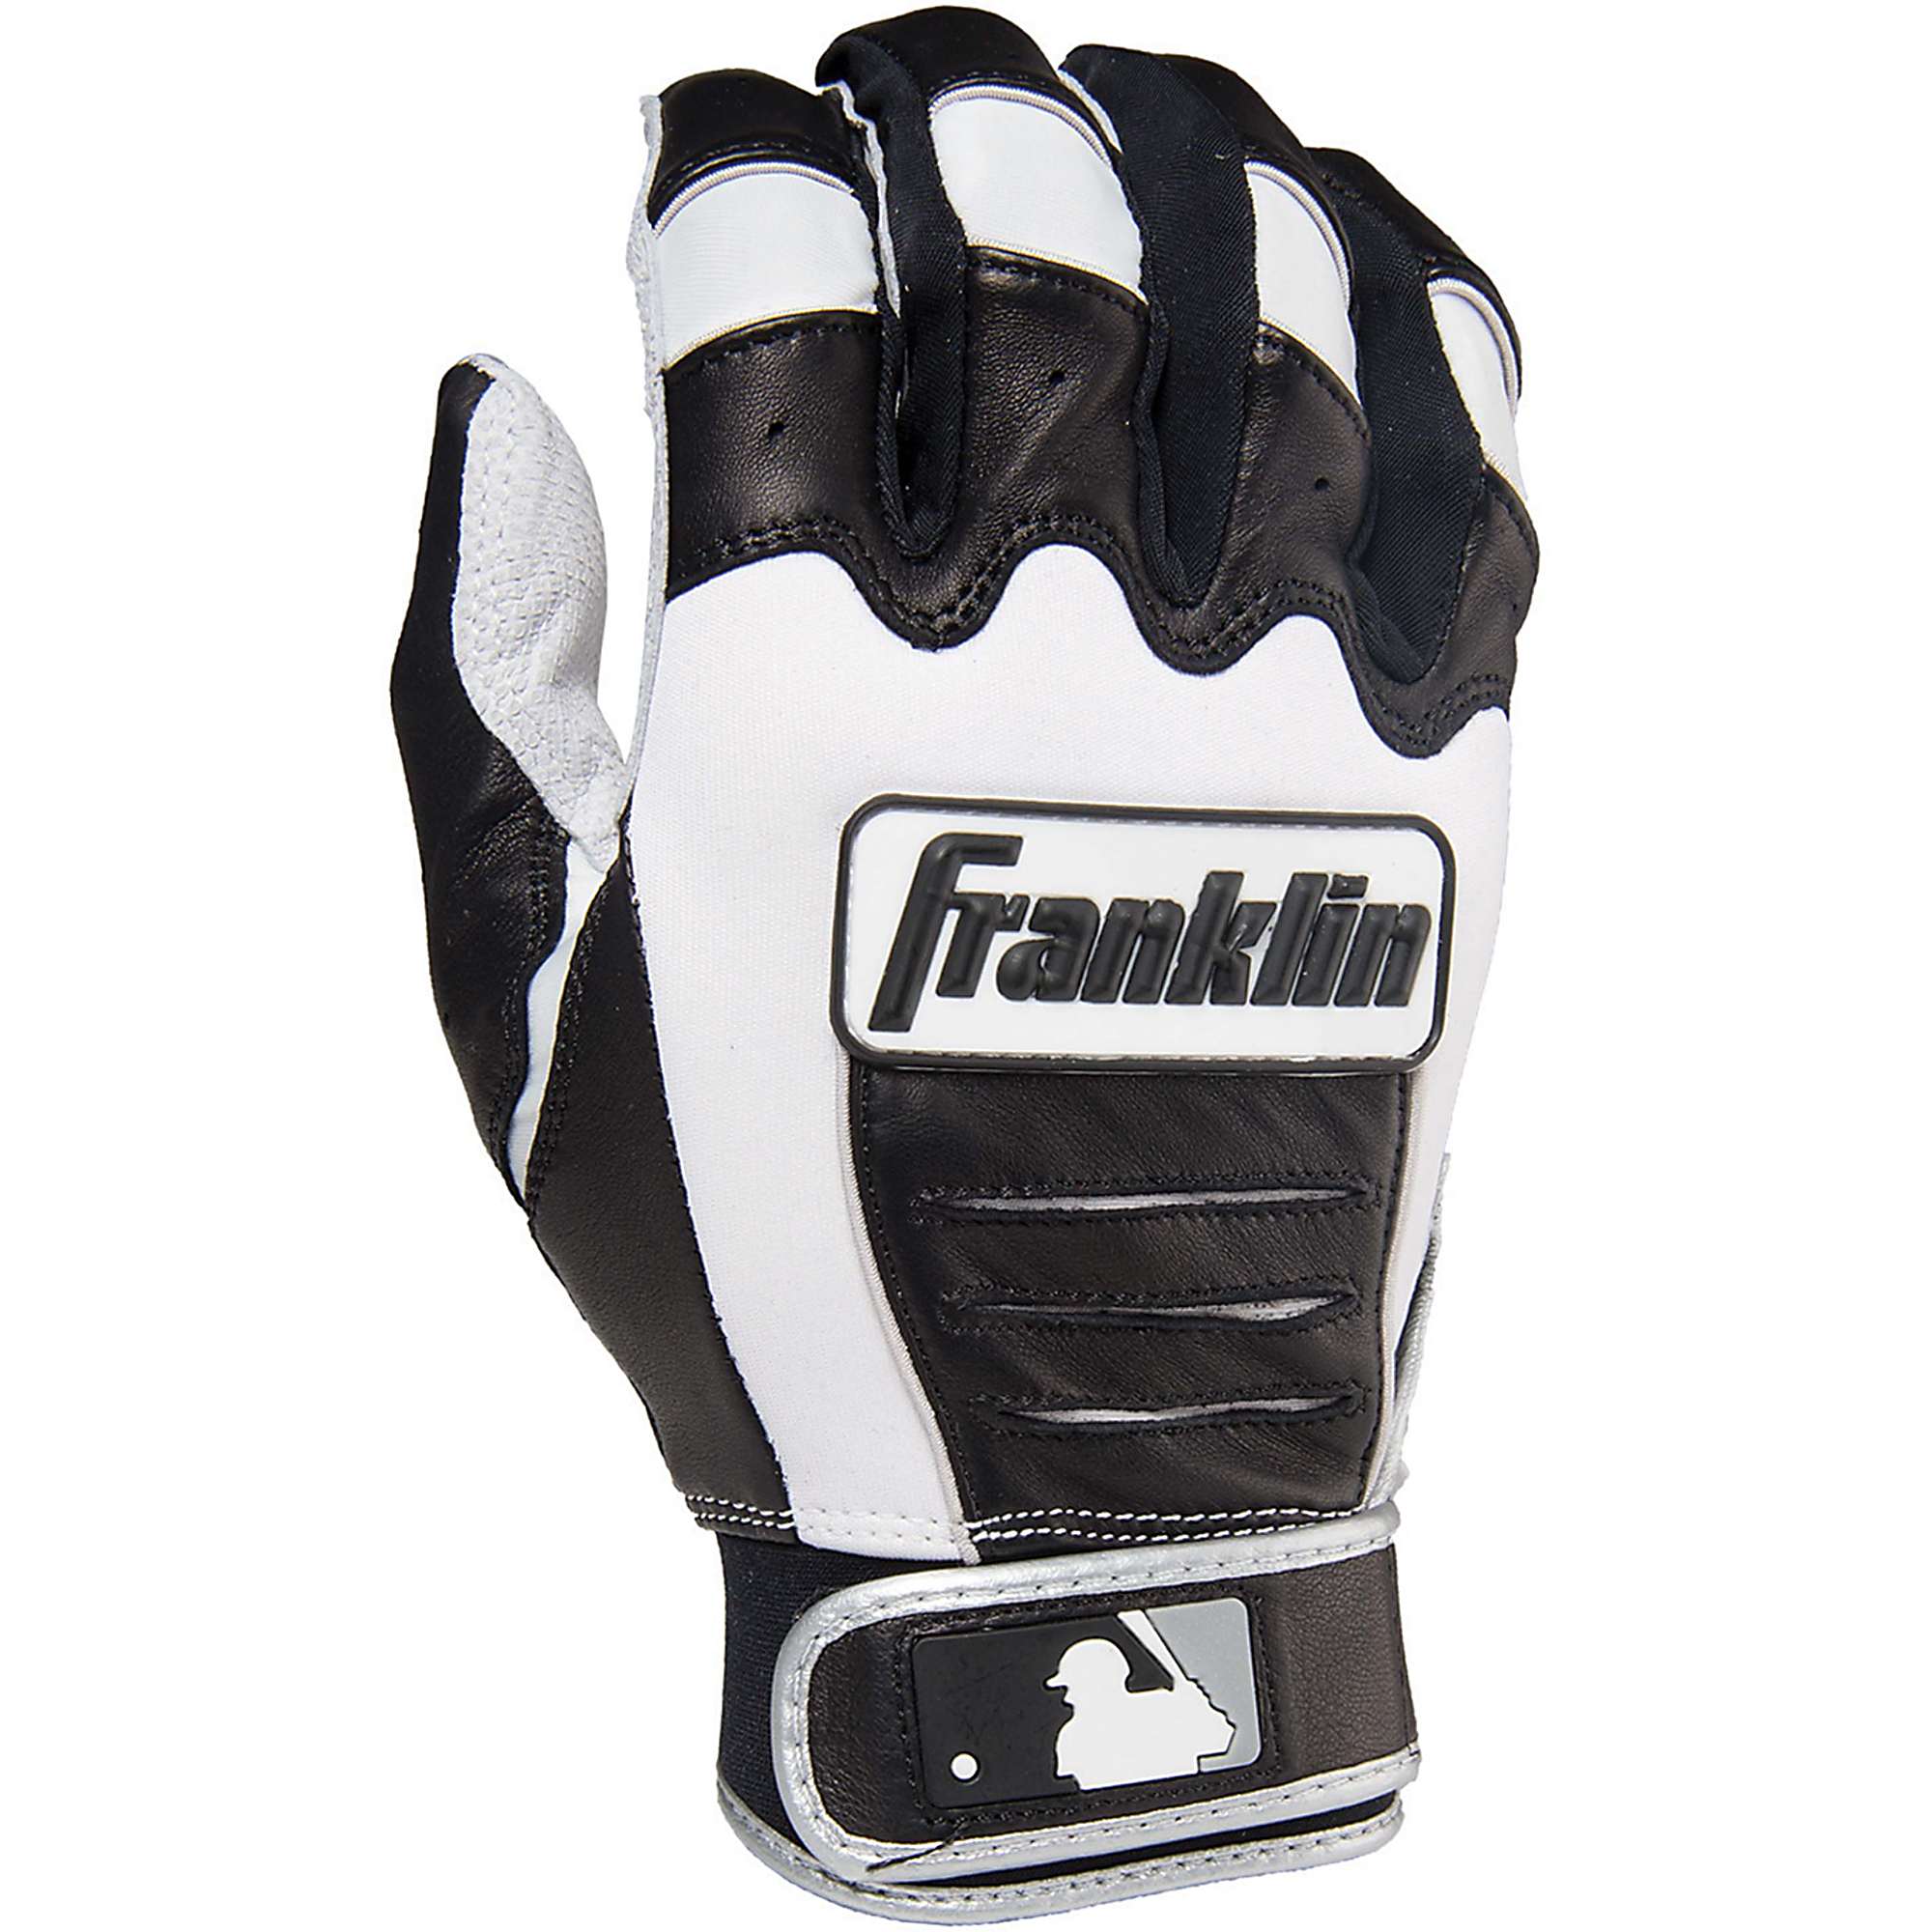 Franklin Men's Cfx Pro Batting Glove | eBay